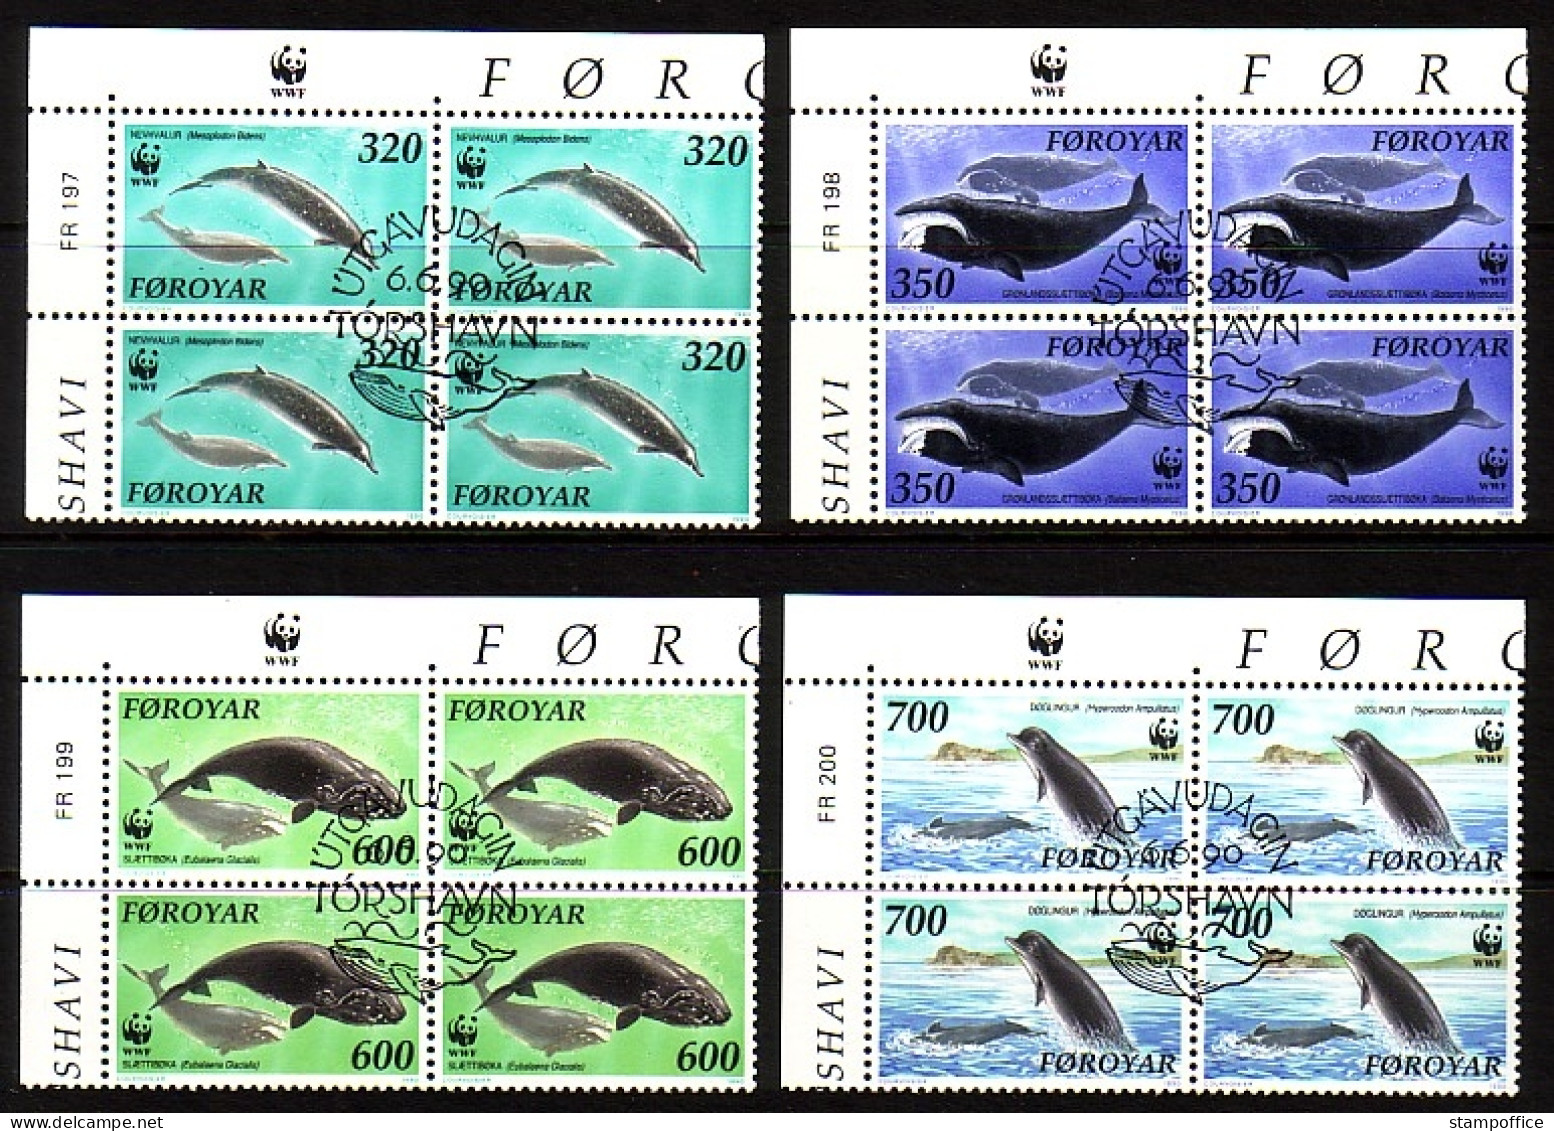 FÄRÖER MI-NR. 203-206 GESTEMPELT(USED) 4er BLOCK FISCHE WALE 1990 - Färöer Inseln